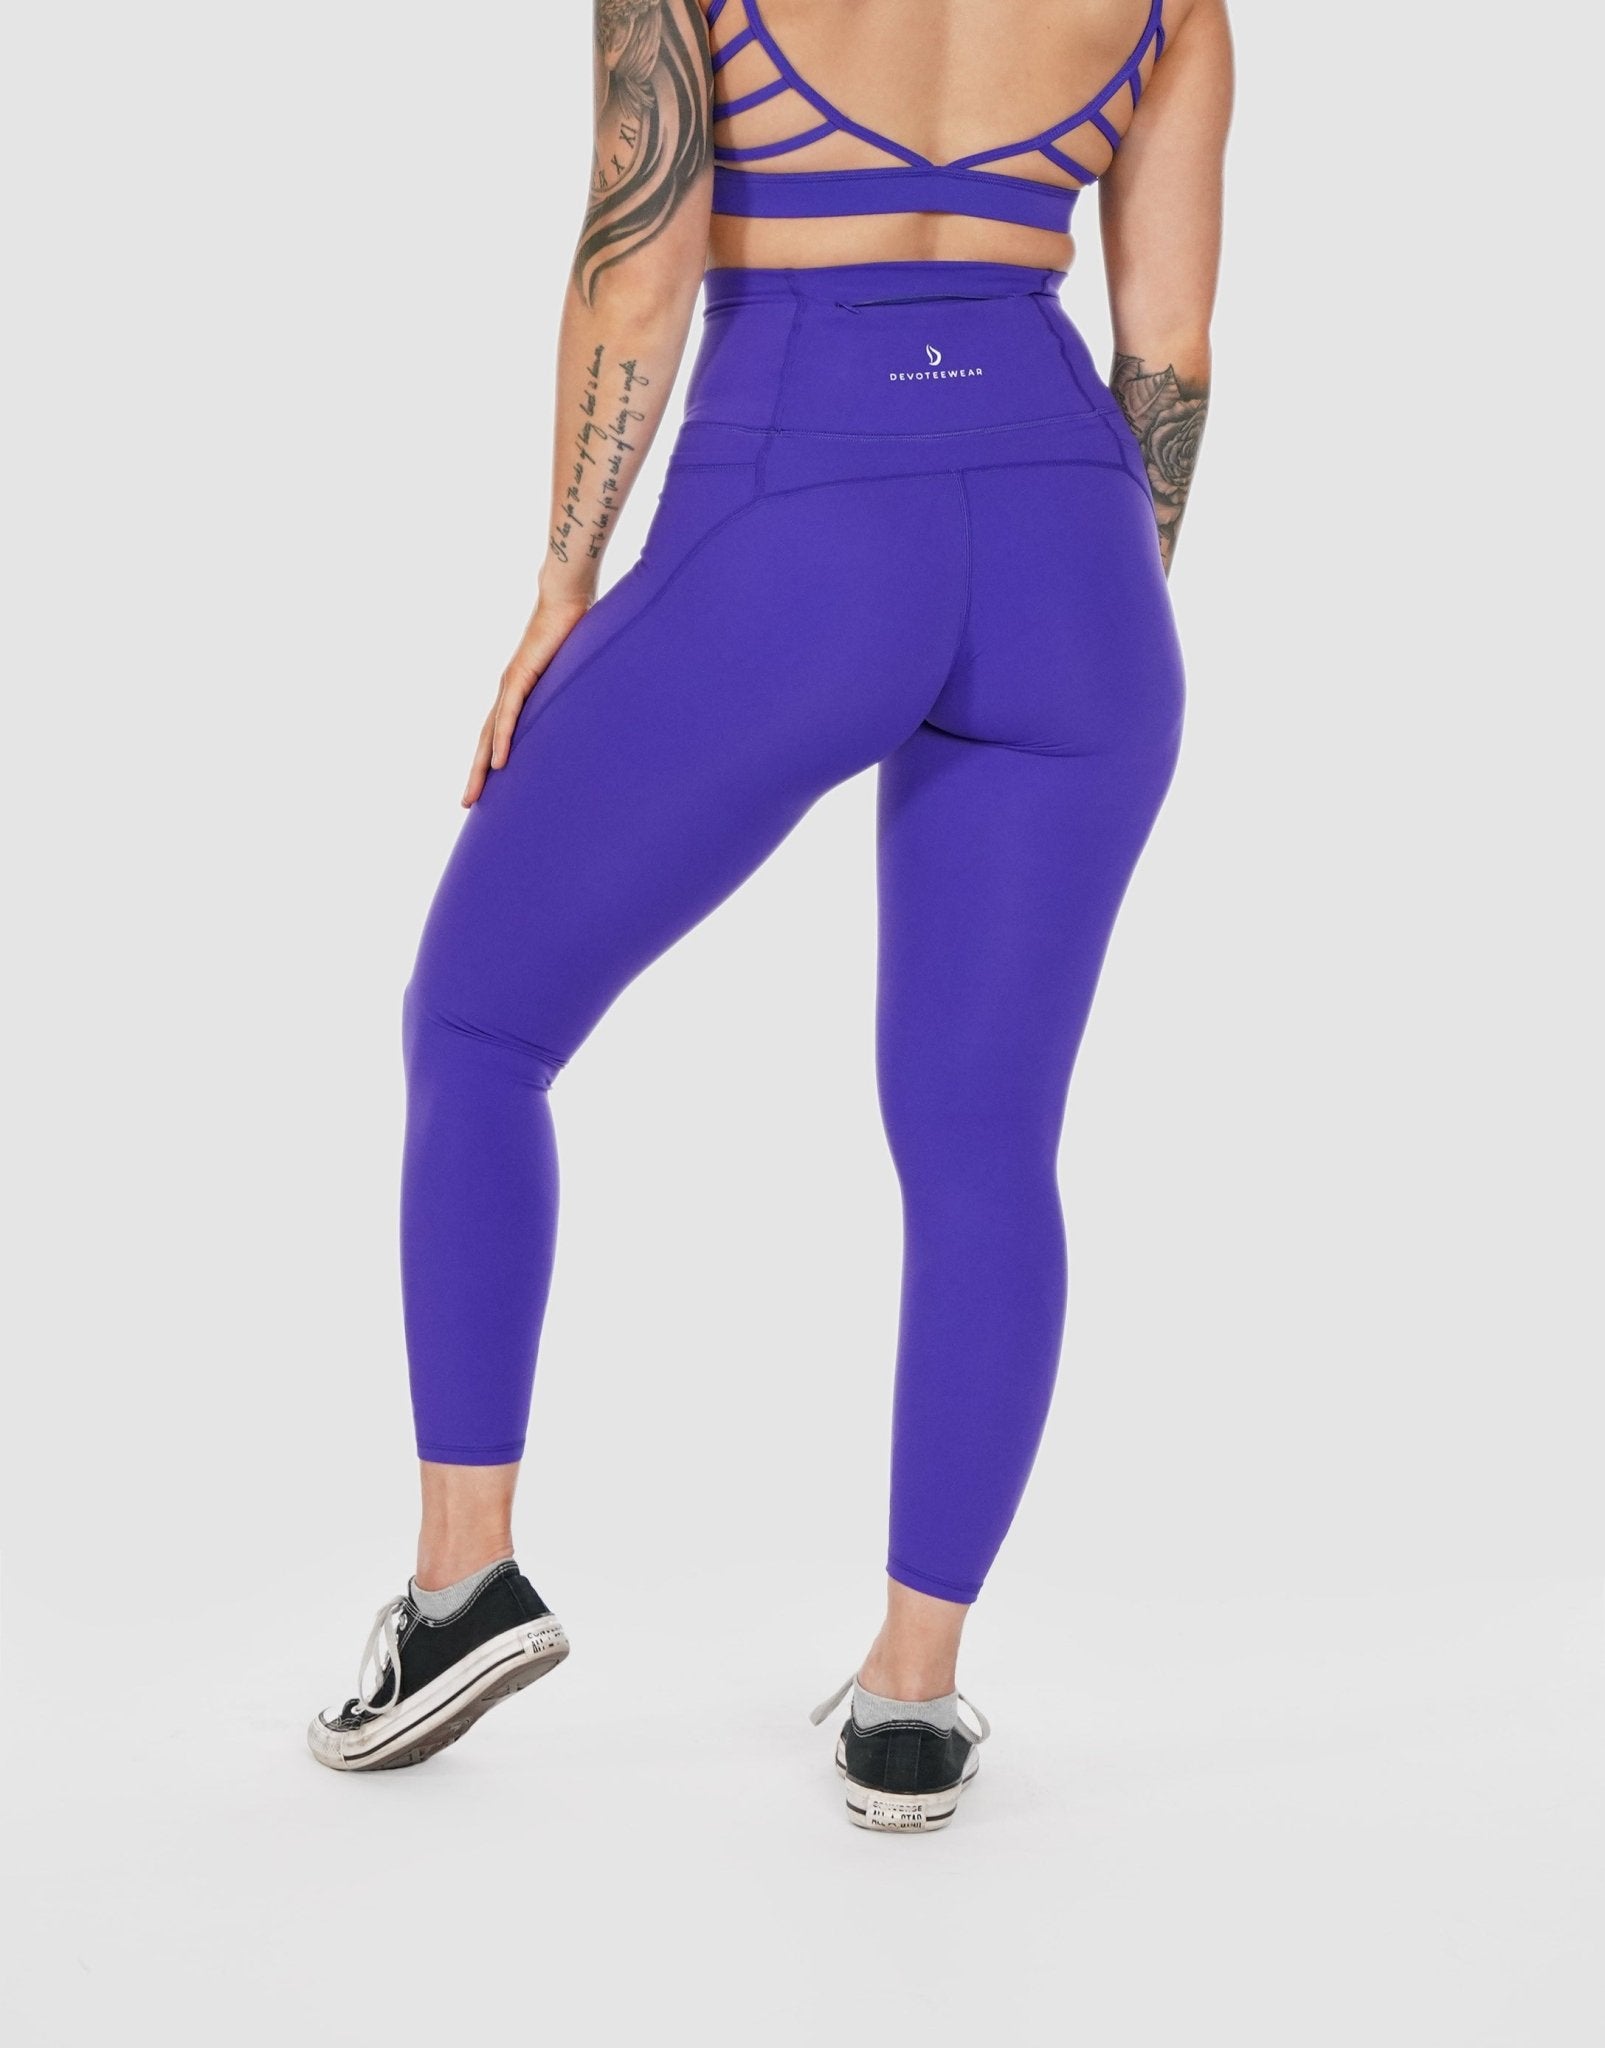 Purple workout legging